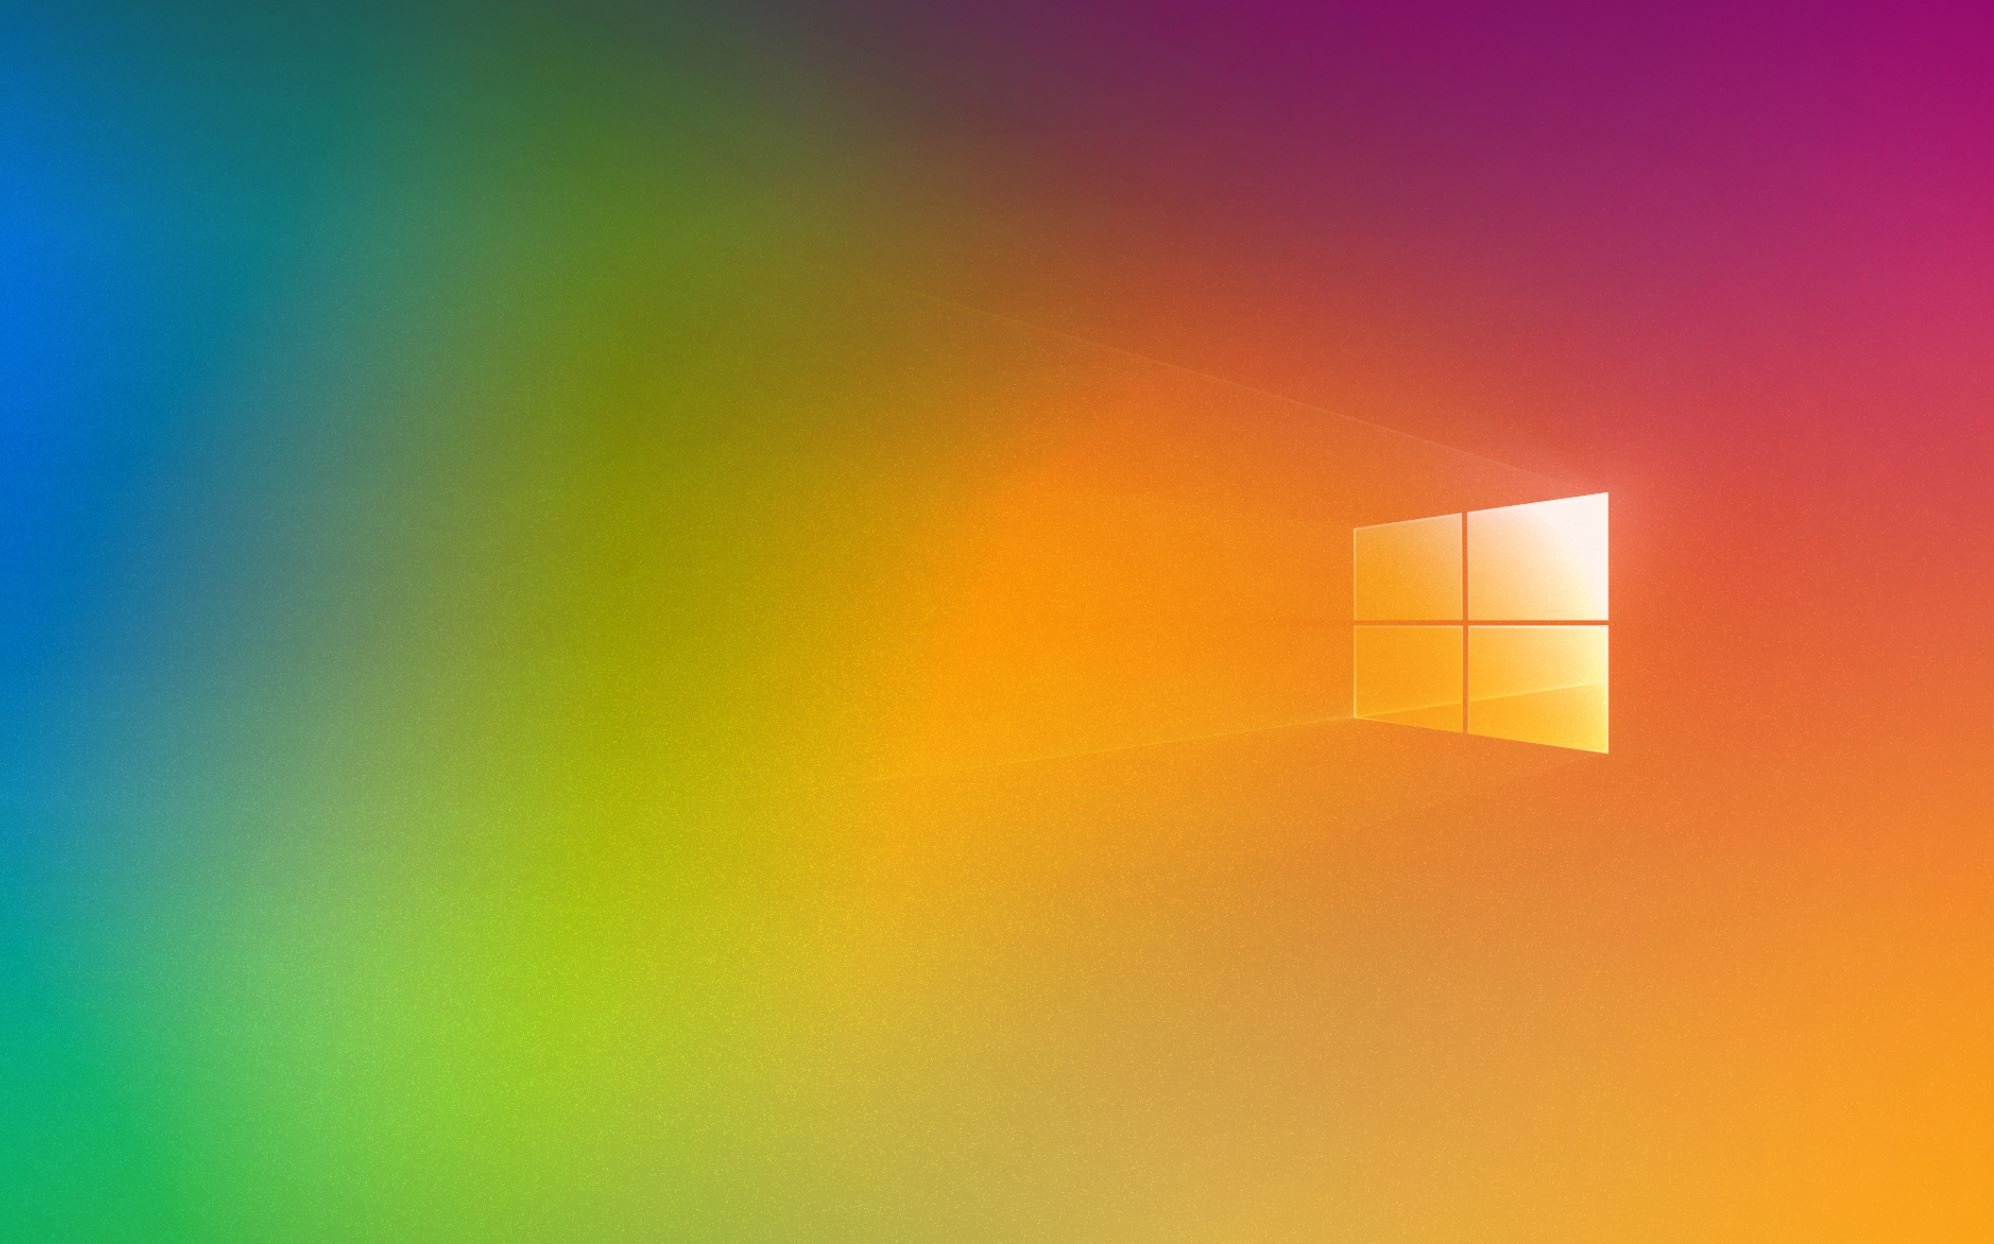 Microsoft Windows 10 version 1803